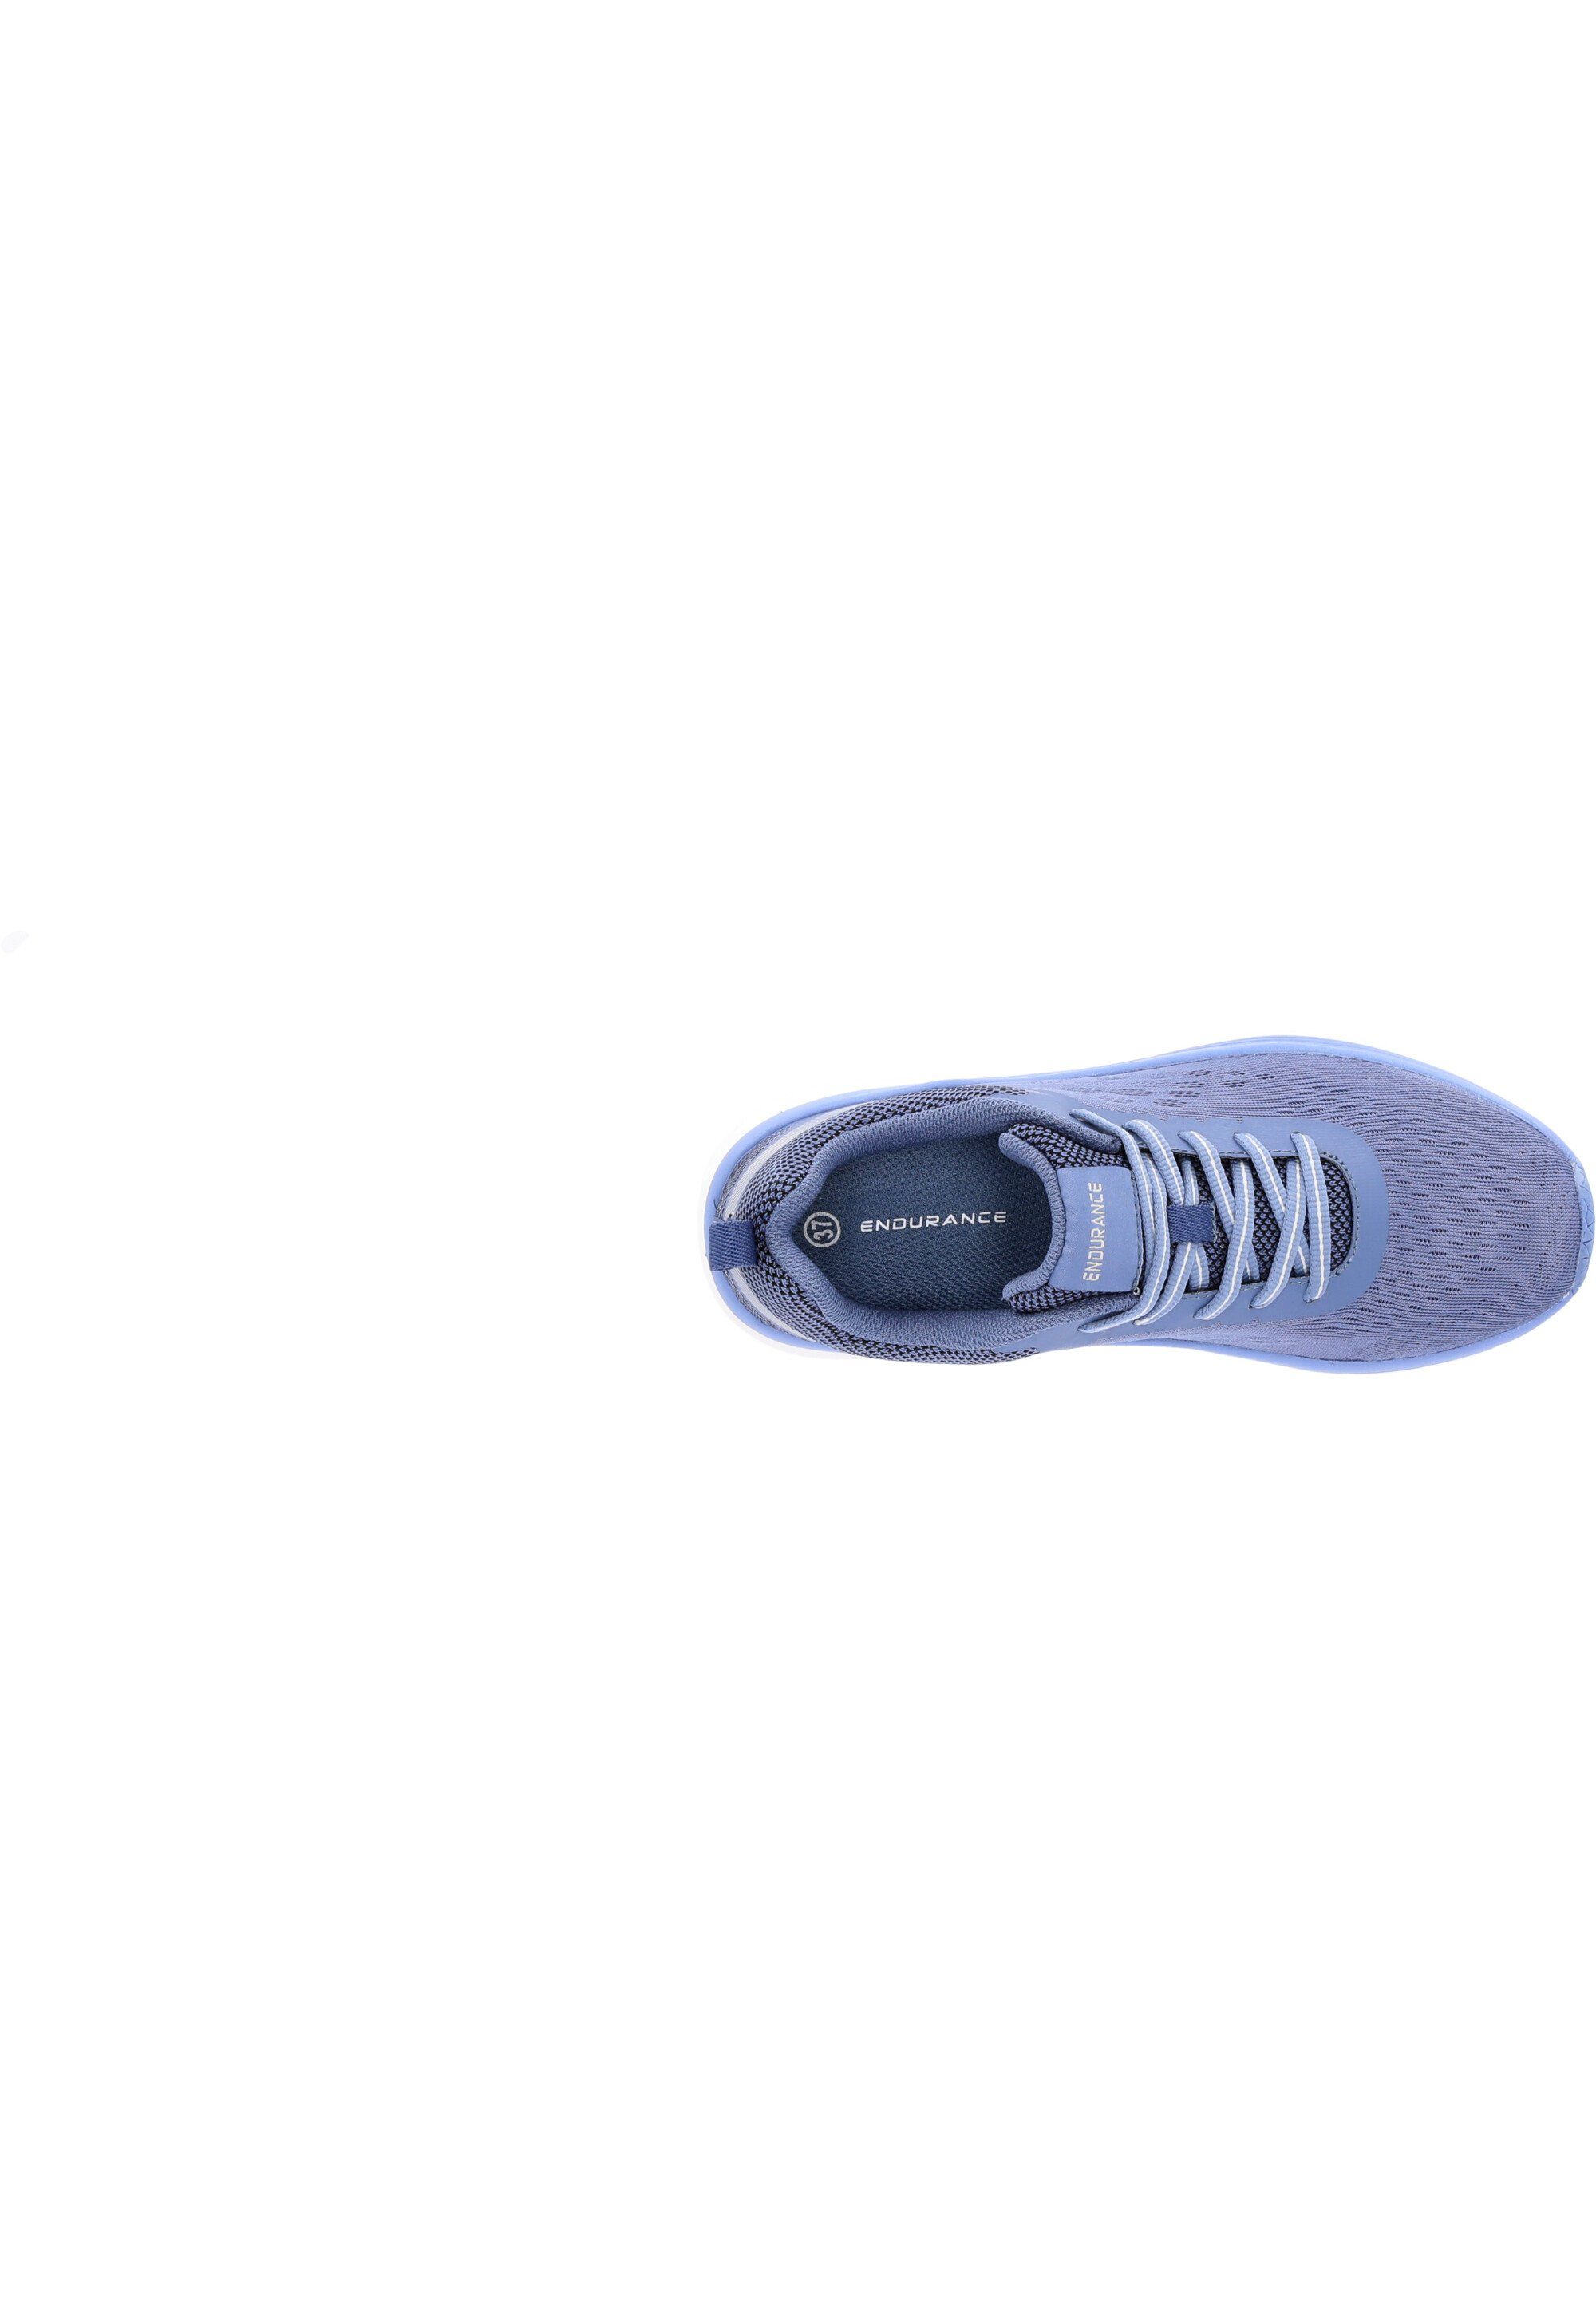 ENDURANCE Fortlian Sneaker Dämpfung komfortabler mit blau